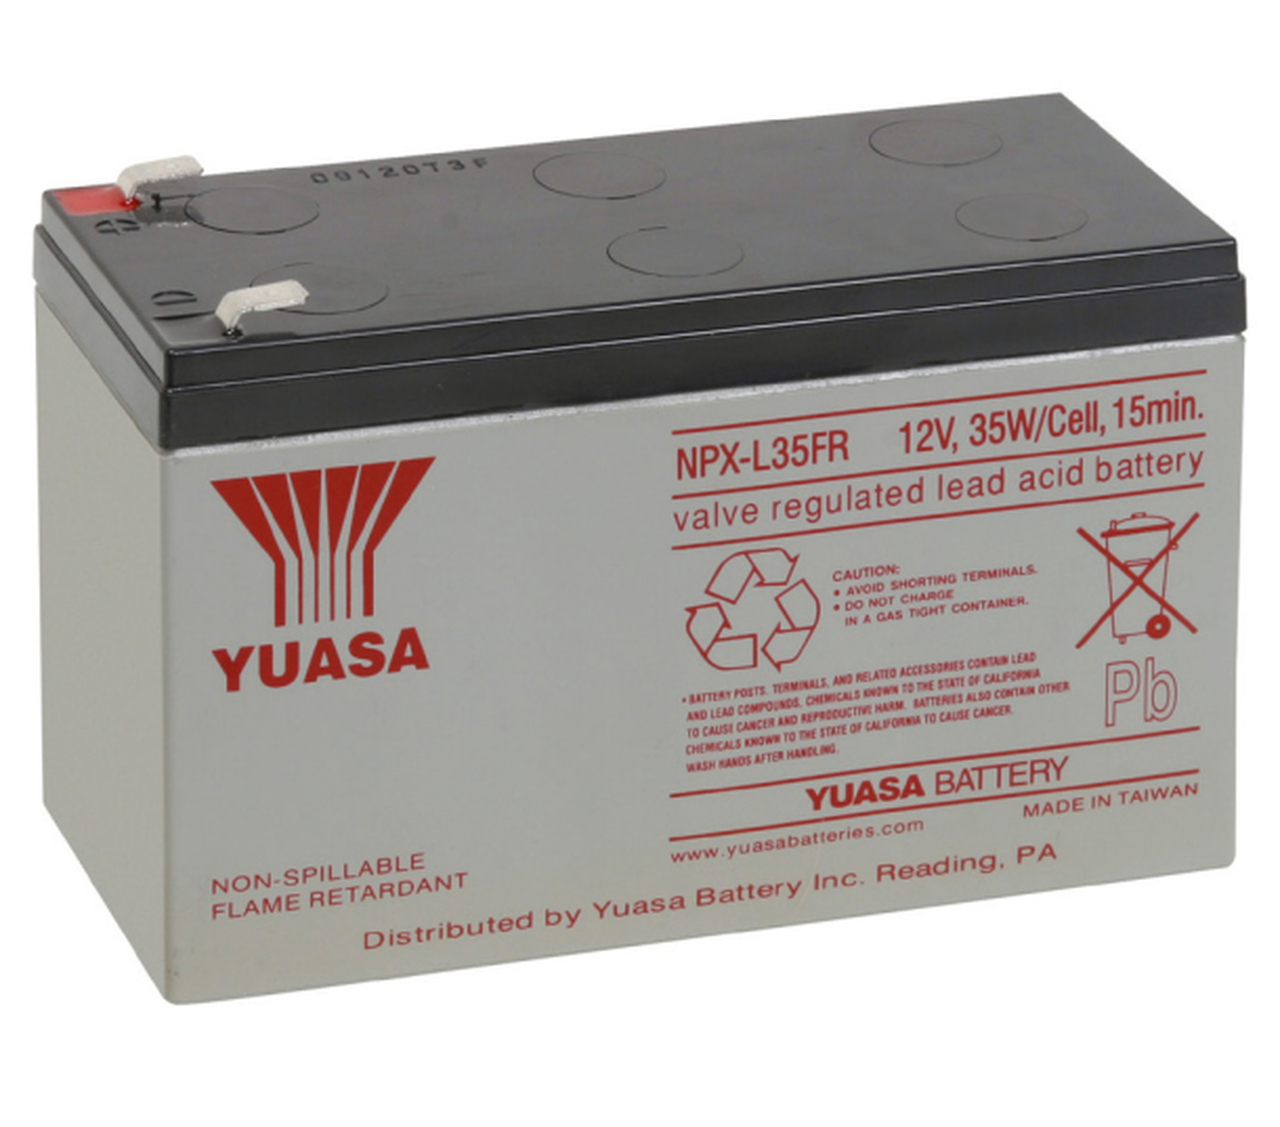 Genesis Yuasa NPX-L35FR Battery-12V 9.0Ah 35W/Cell Sealed Rechargeable